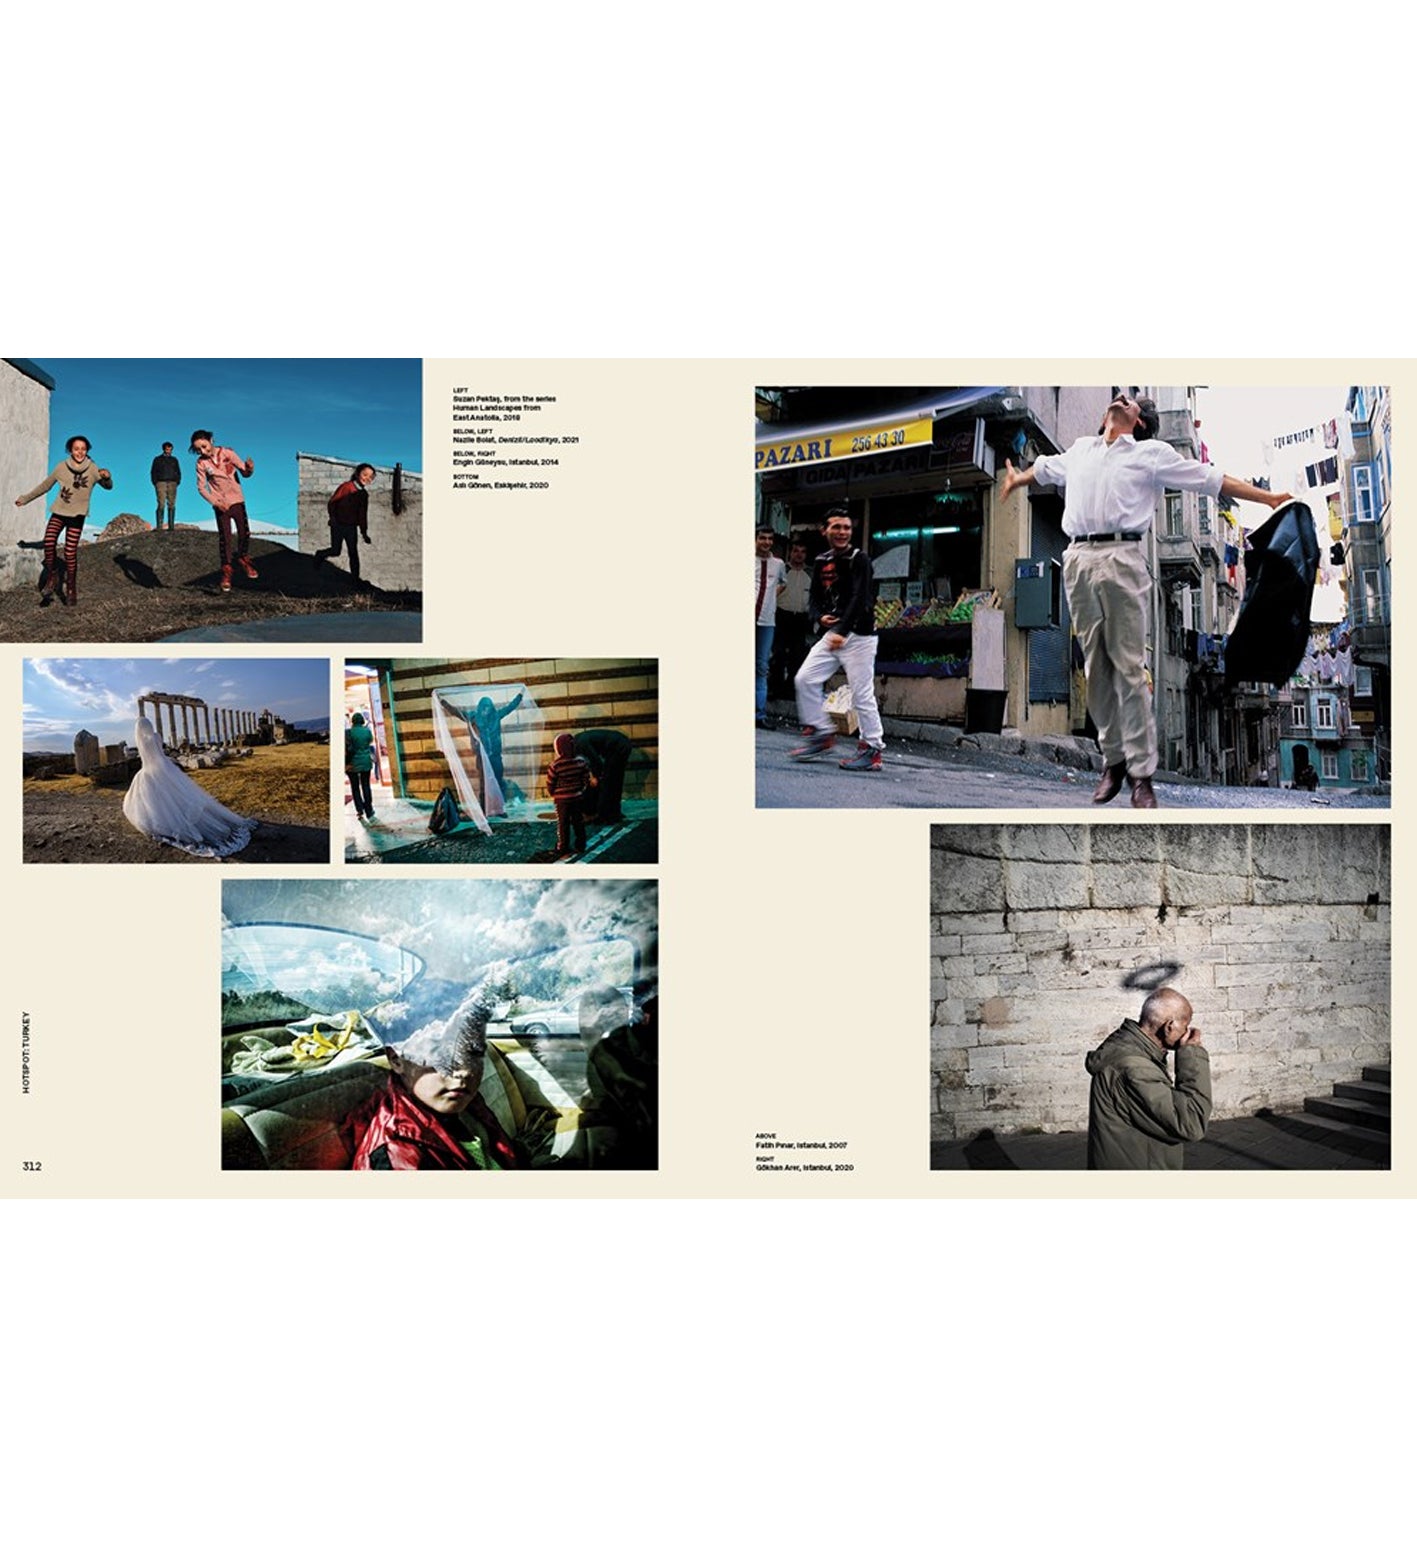 Stephen McLaren & Matt Stuart: Reclaim the Street - Street Photography's Moment